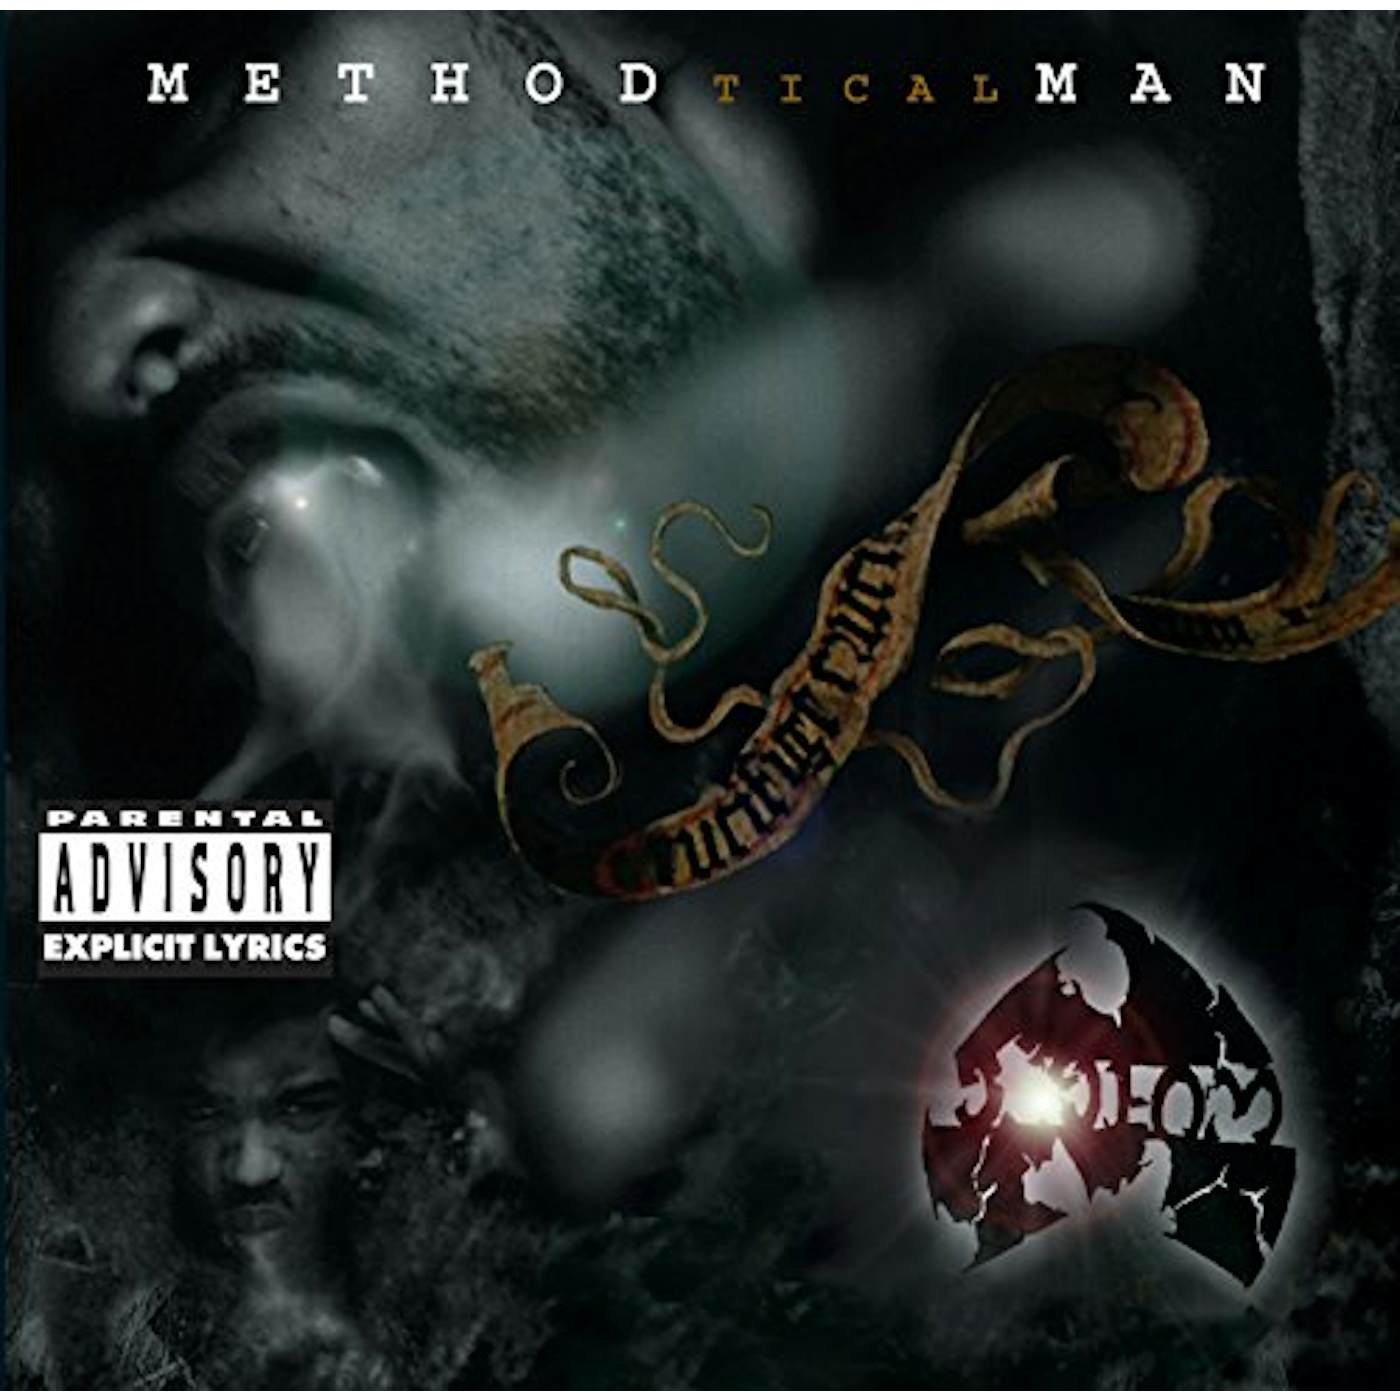 Method Man Tical Vinyl Record